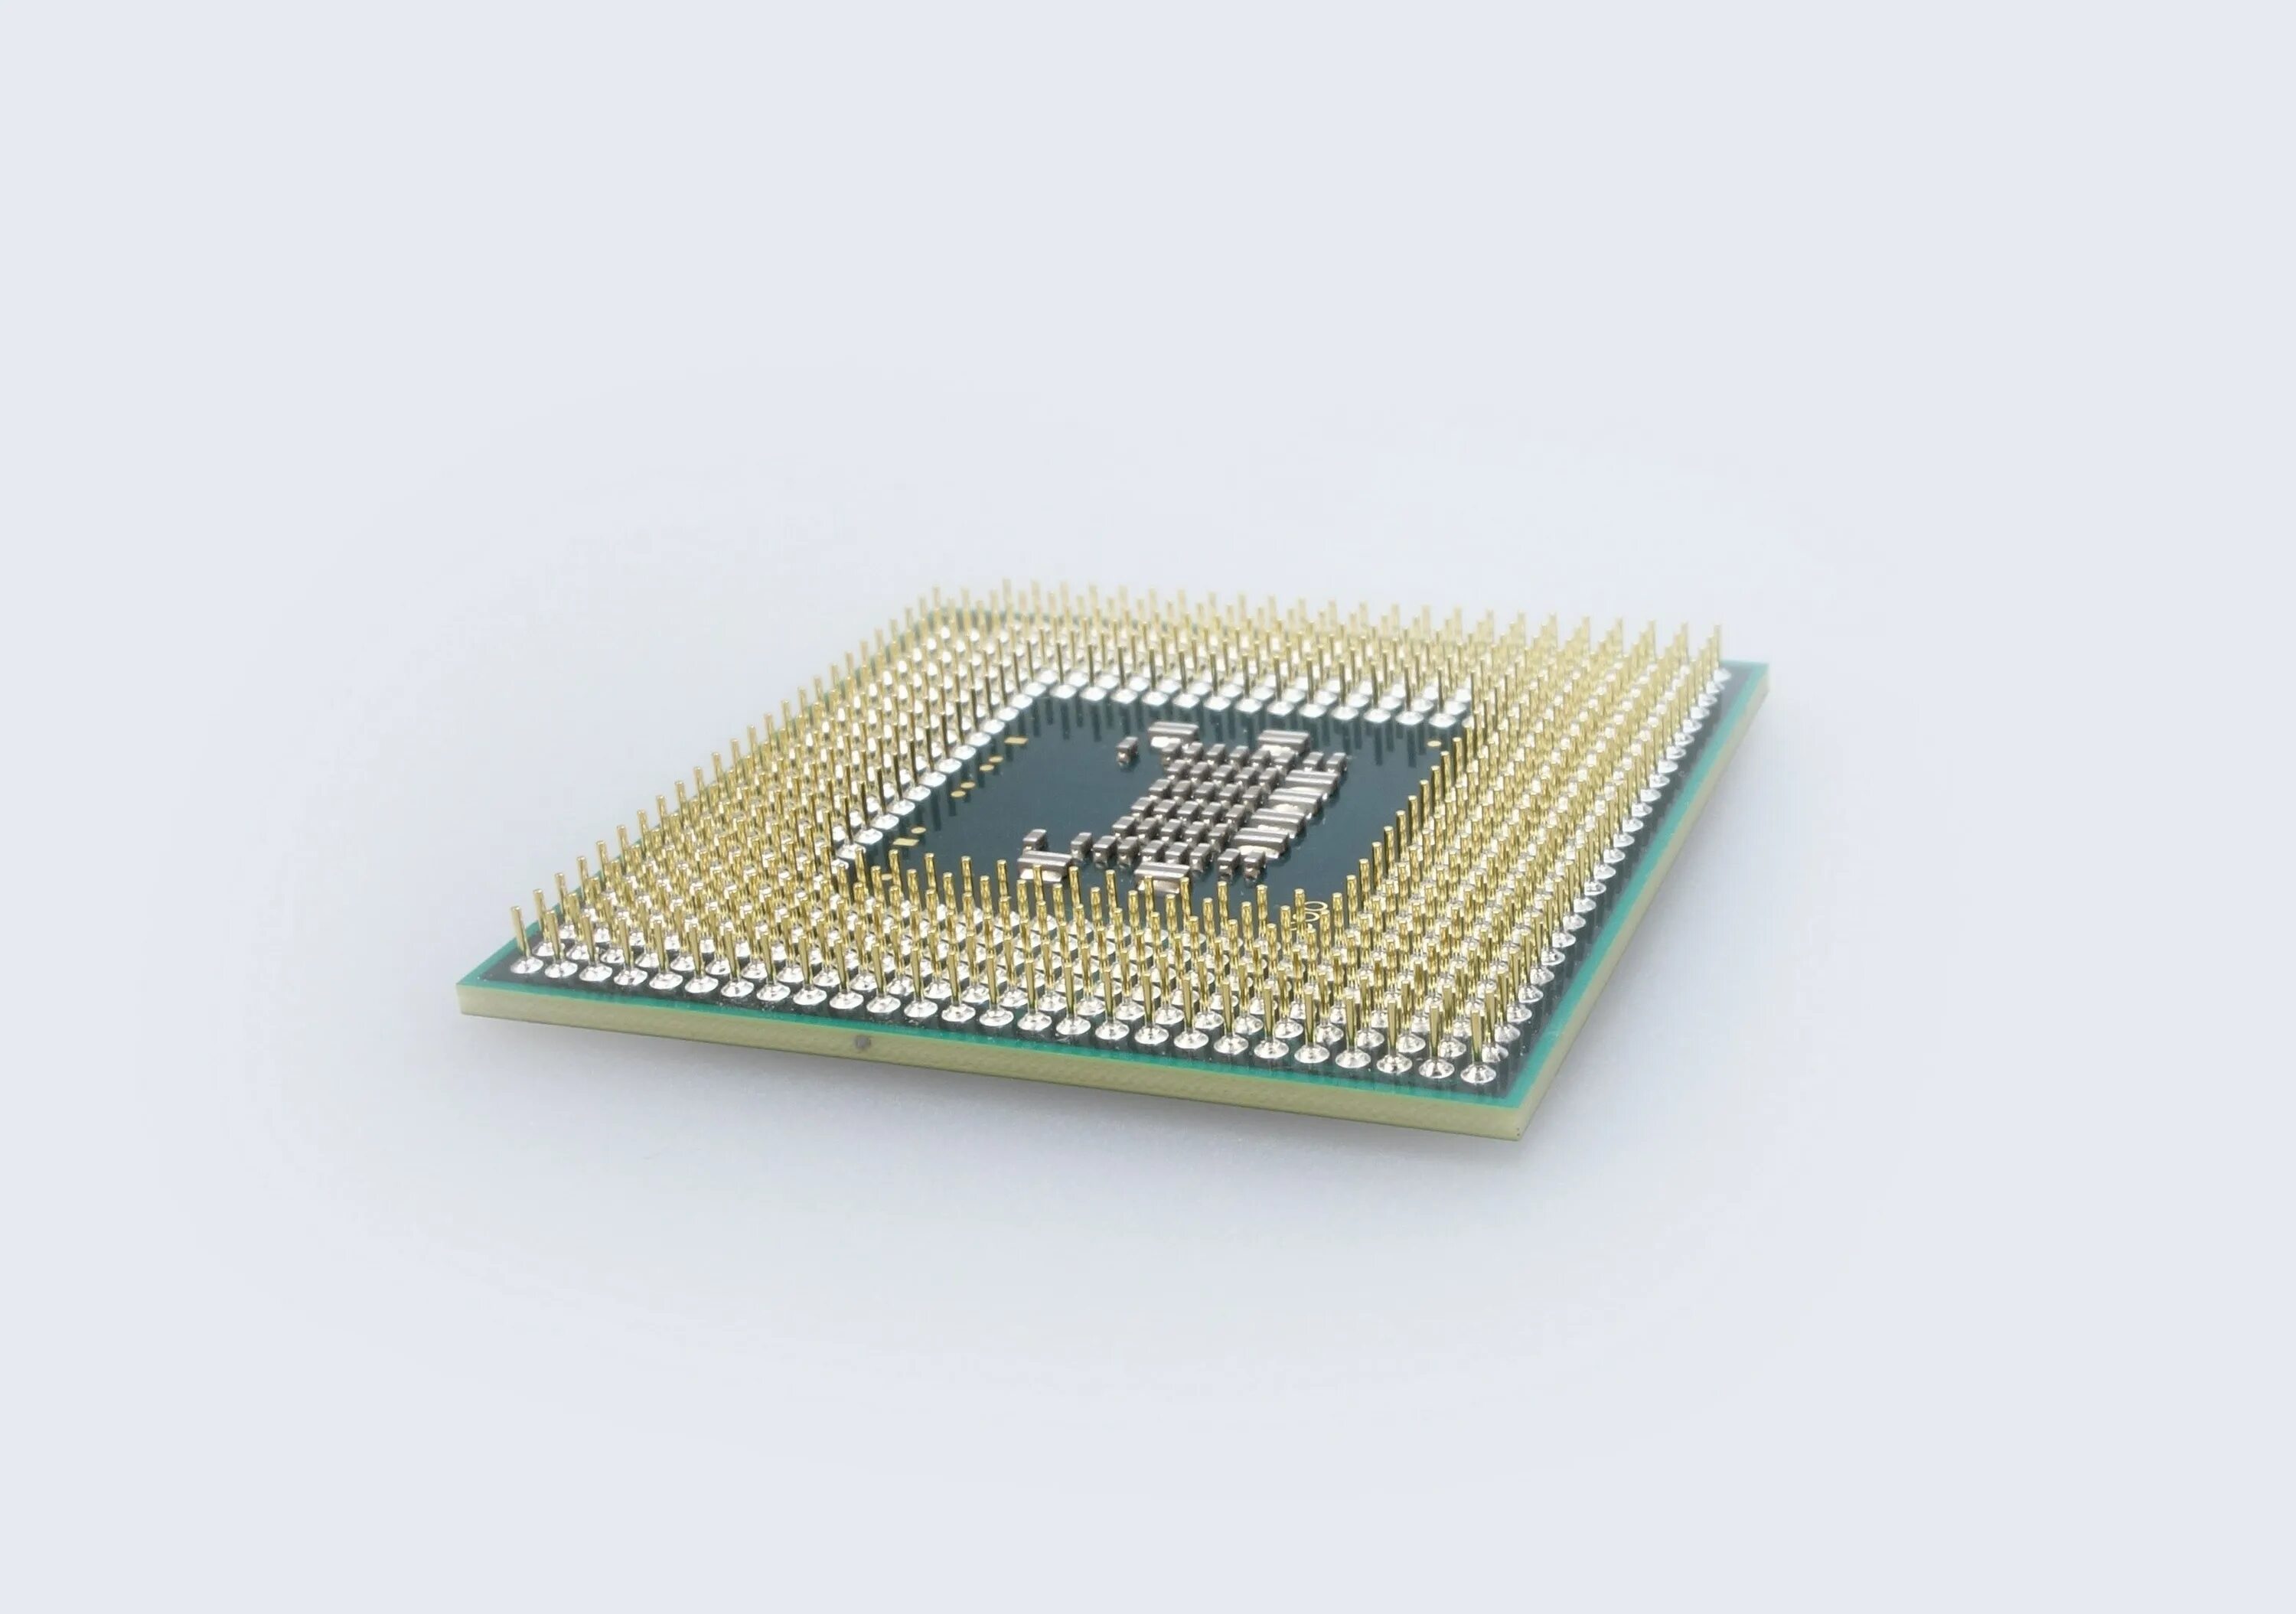 Process процессор. Процессор (CPU) микропроцессор. Микропроцессор Интел. Чип процессора Интел. Microprocessor Intel pd0051.